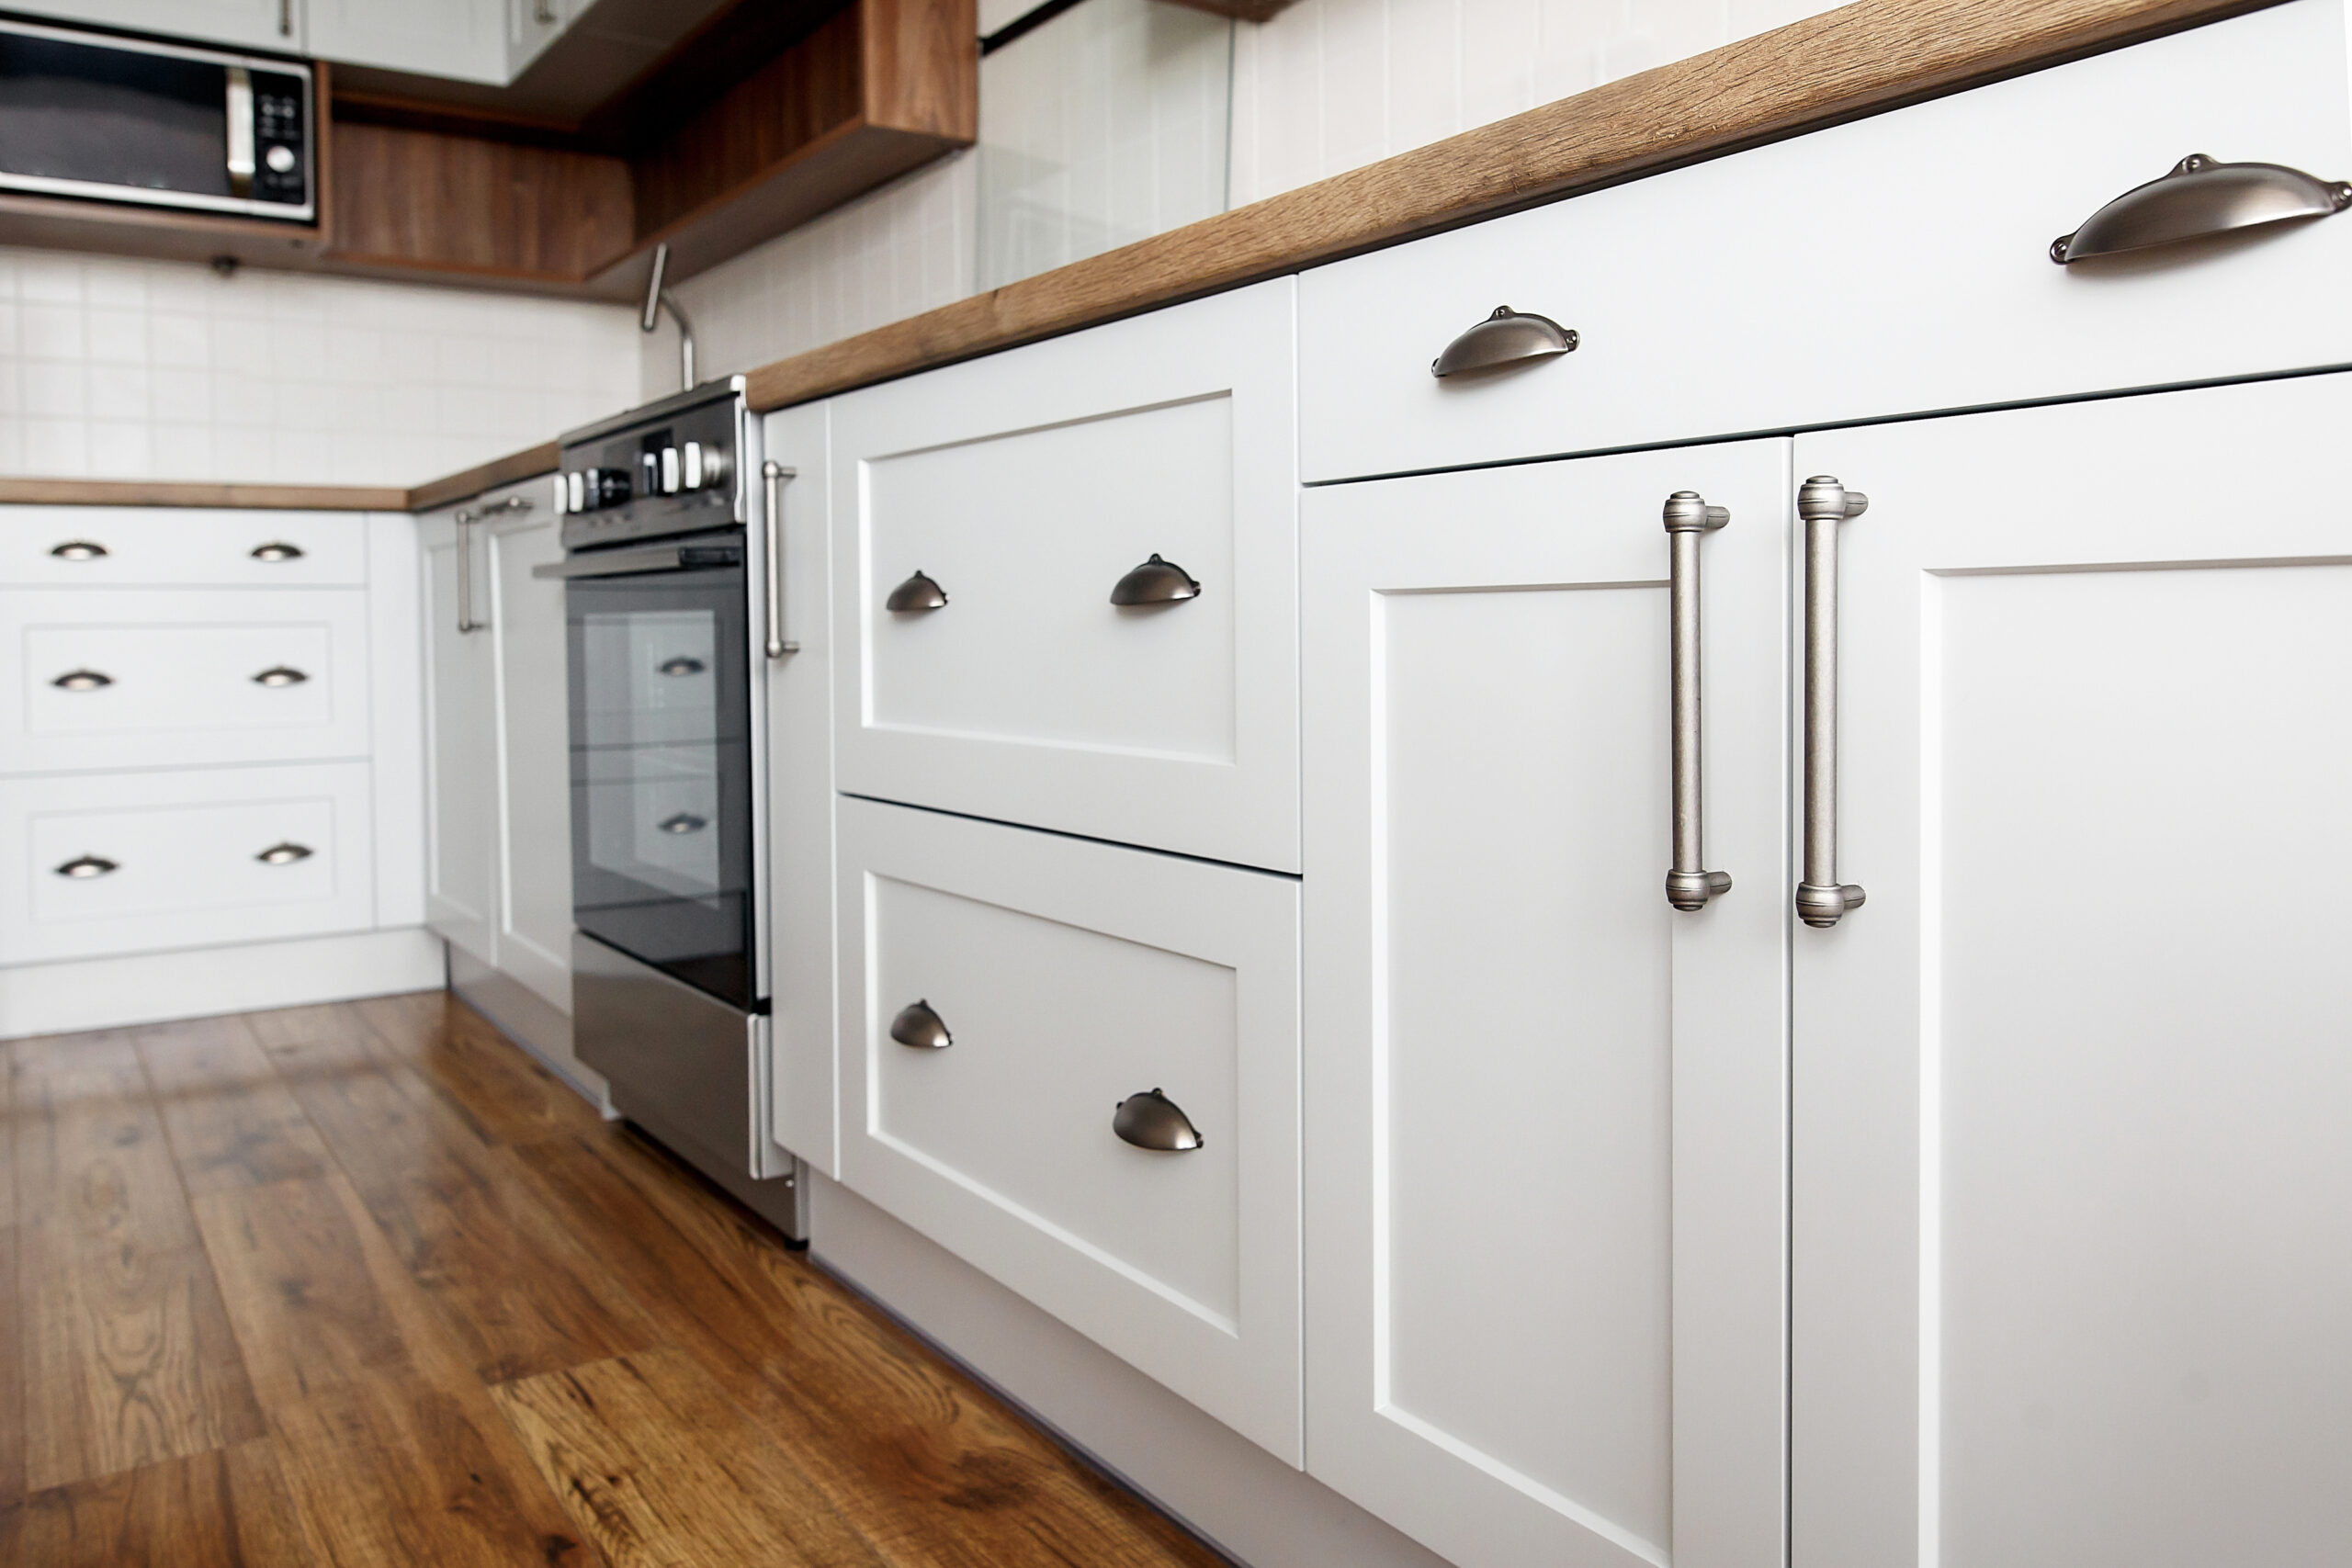 Stylish Light Gray Handles On Cabinets Close Up, Kitchen Interio